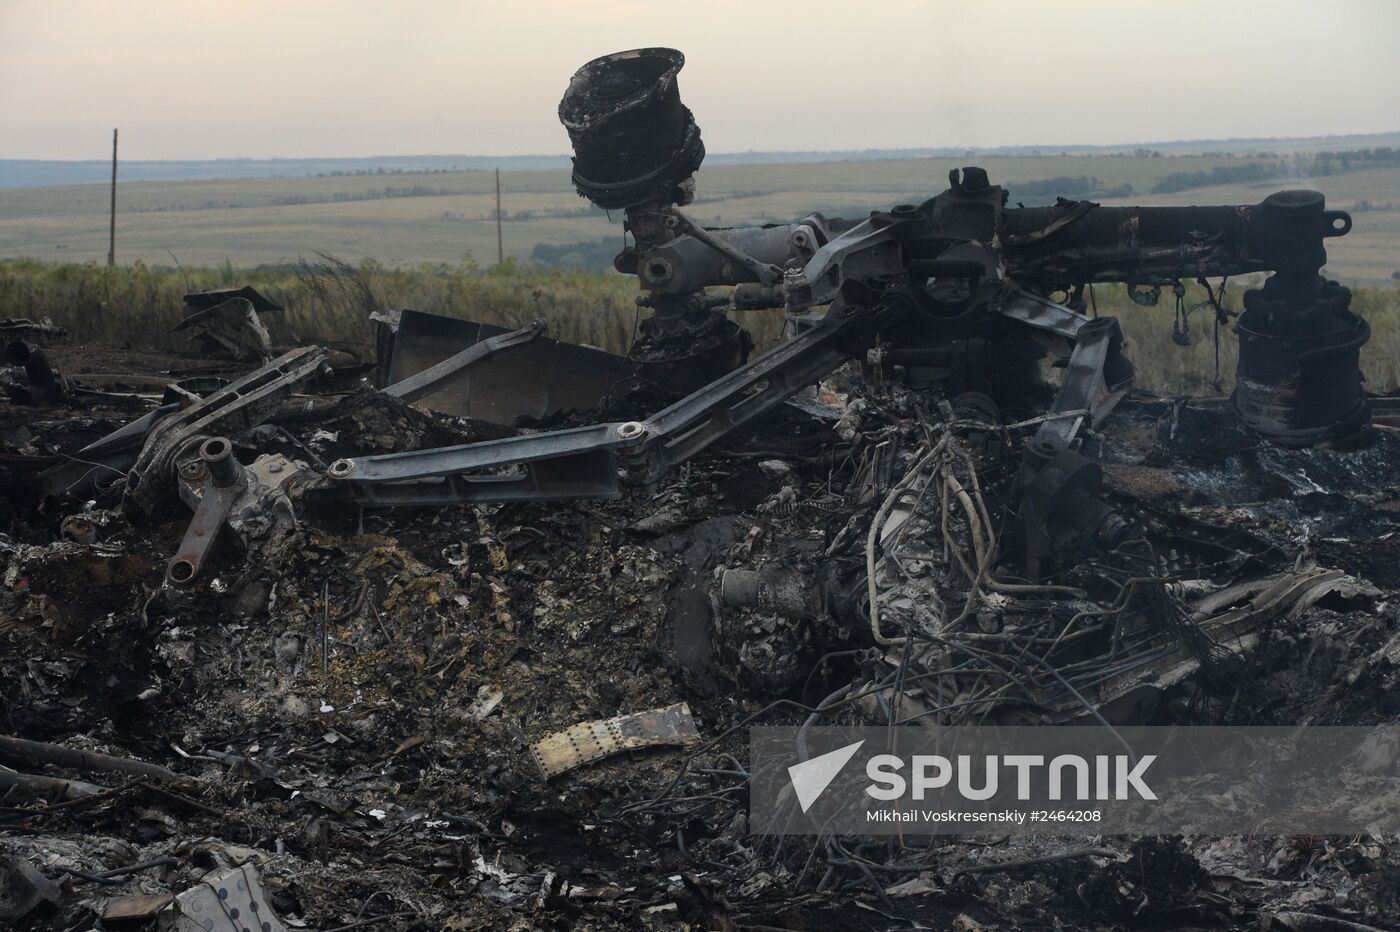 Malaysian Boeing crashes in Ukraine